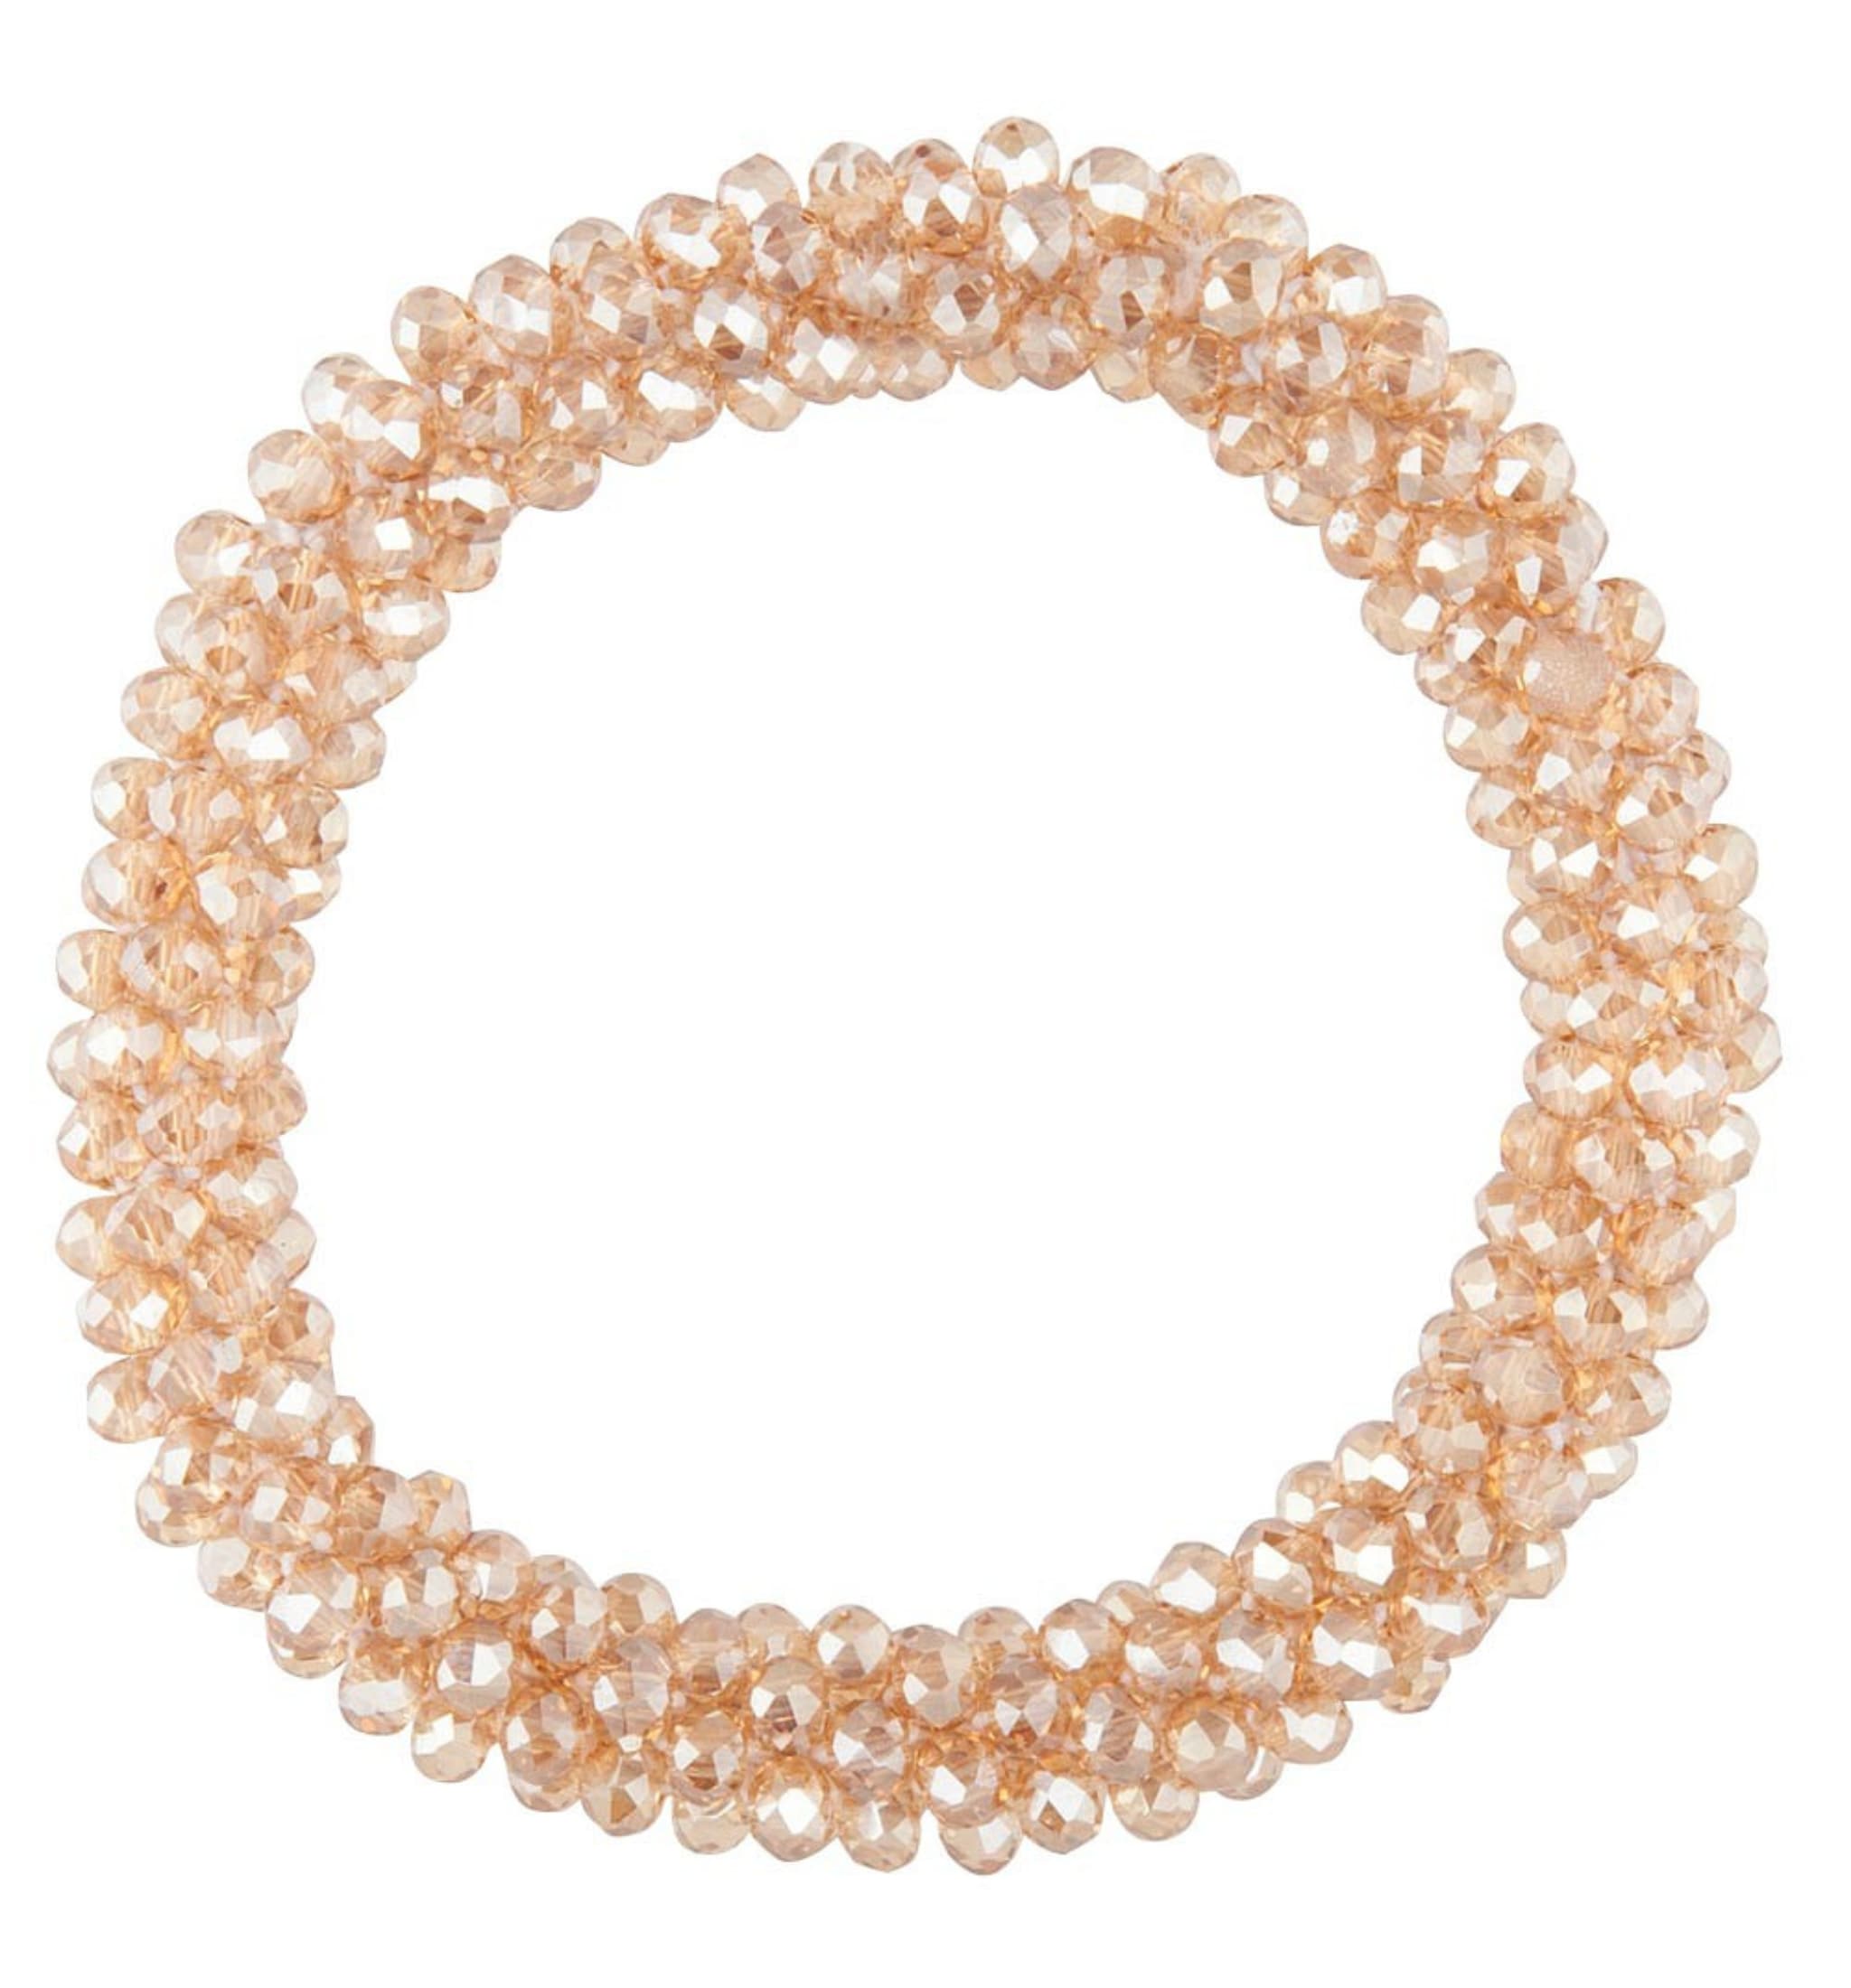 Shiny Beads Scrunchie - Gold